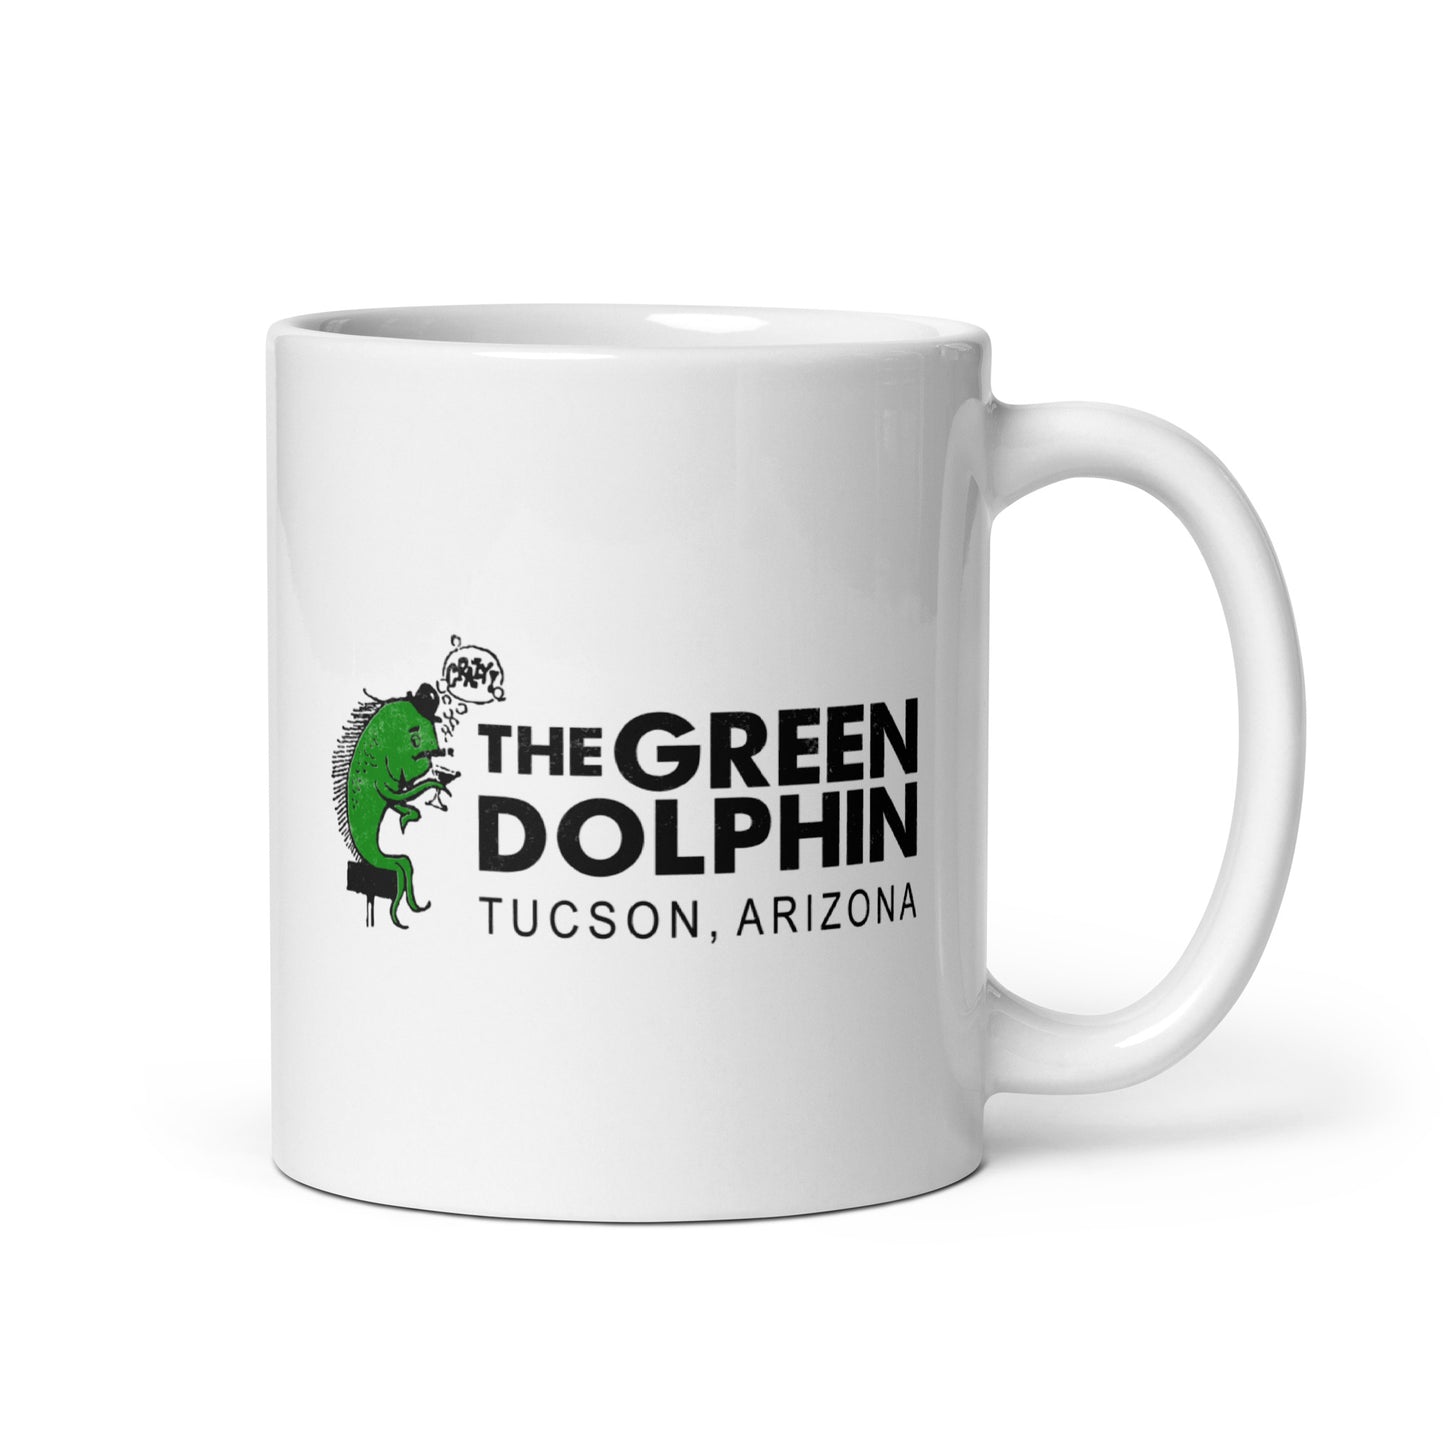 The Green Dolphin Coffee Mug